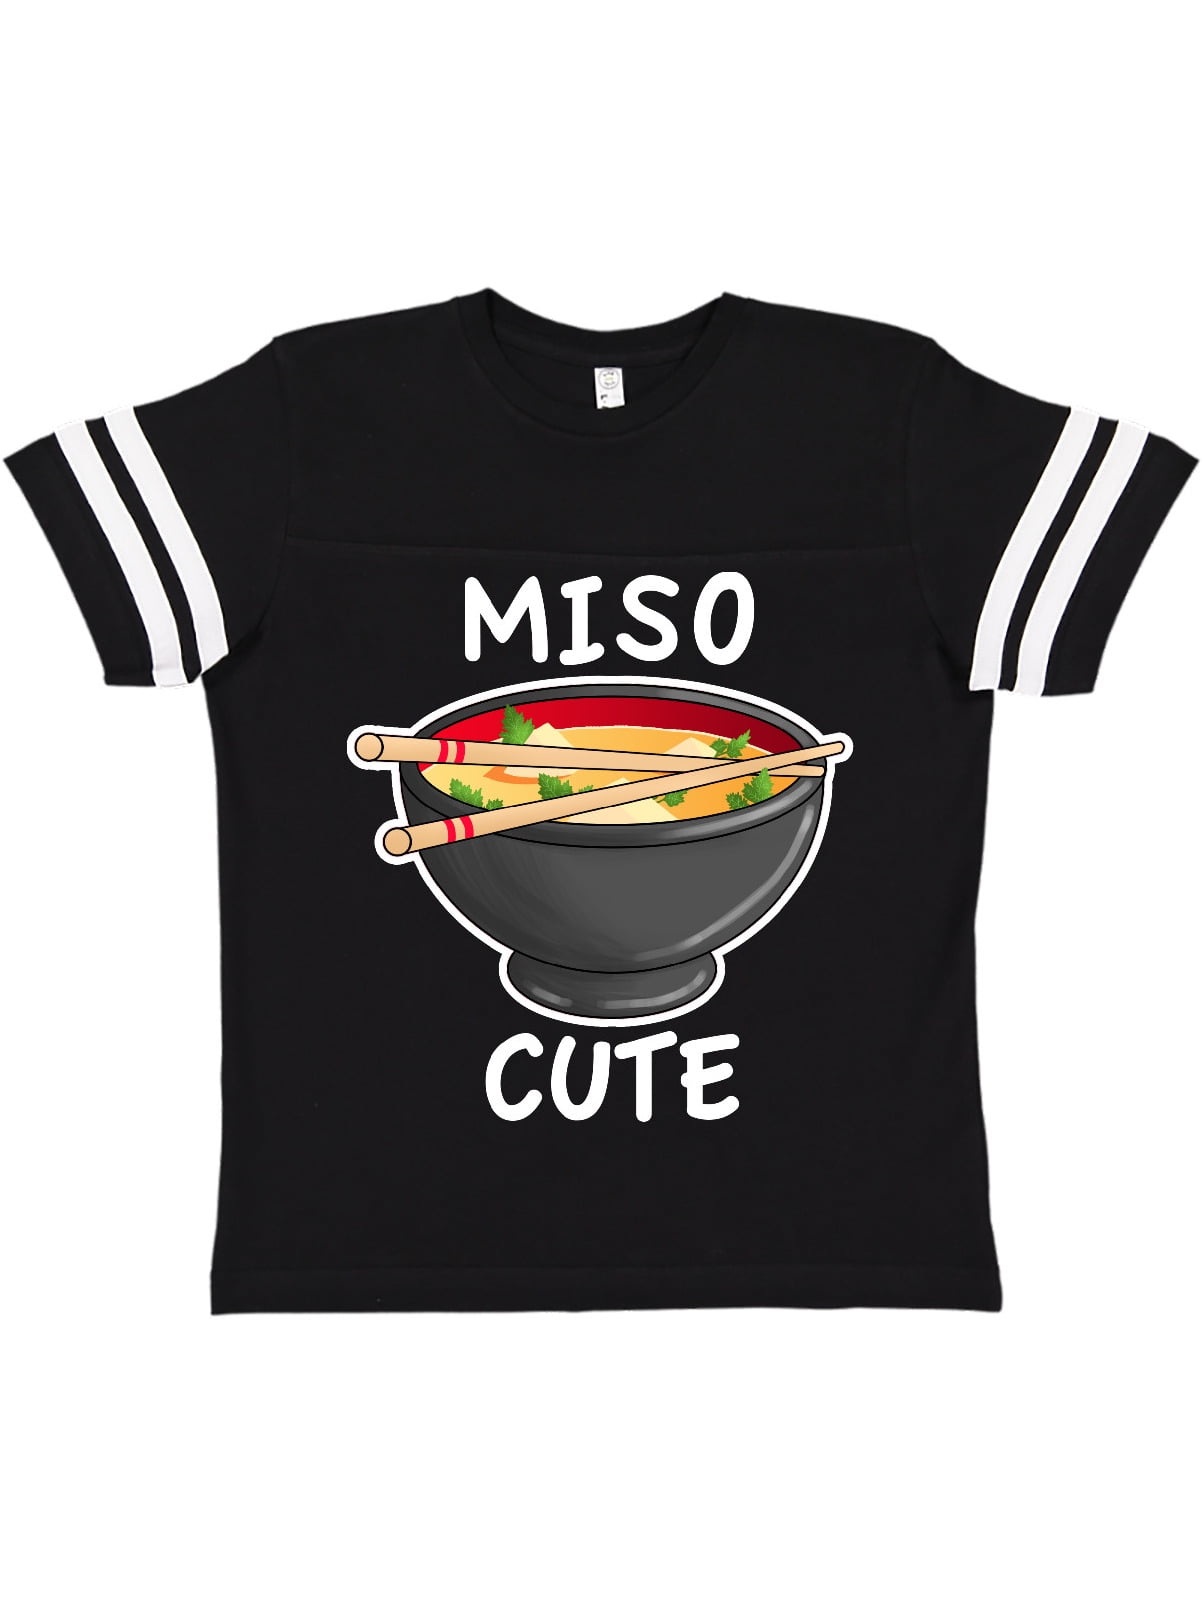 Miso Cute with Miso Soup Youth T-Shirt - Walmart.com - Walmart.com